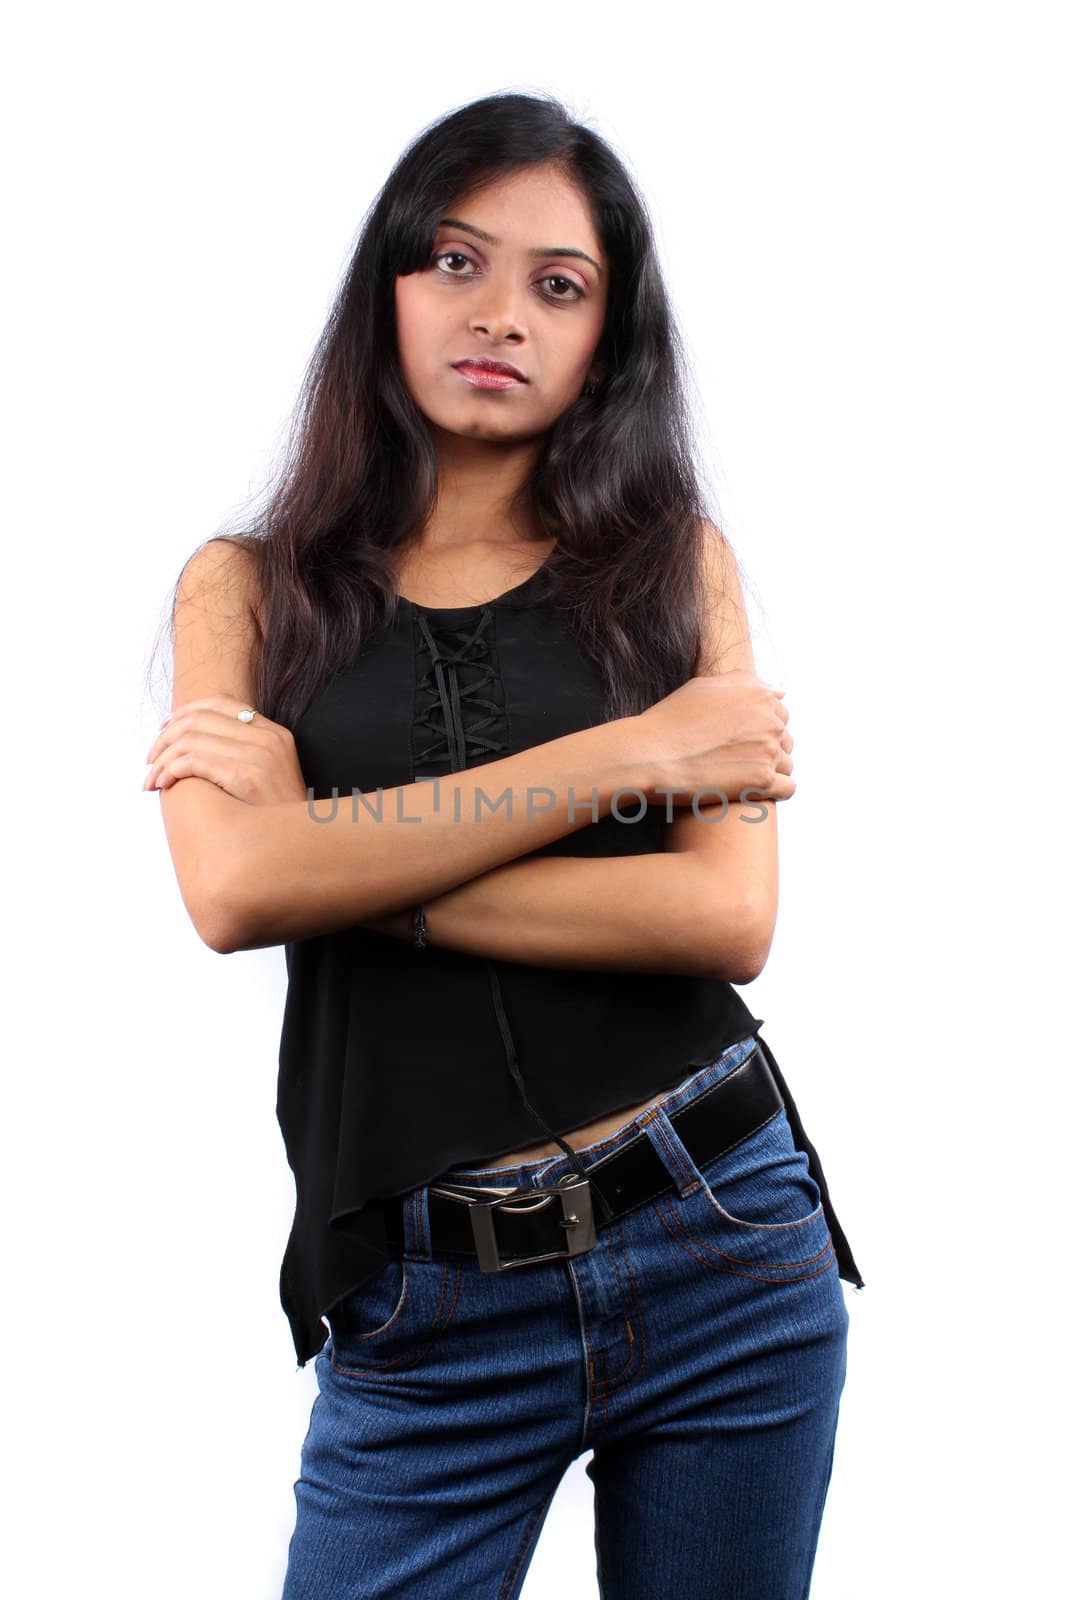 A portrait of a stylish teenage Indian model, on white studio background.